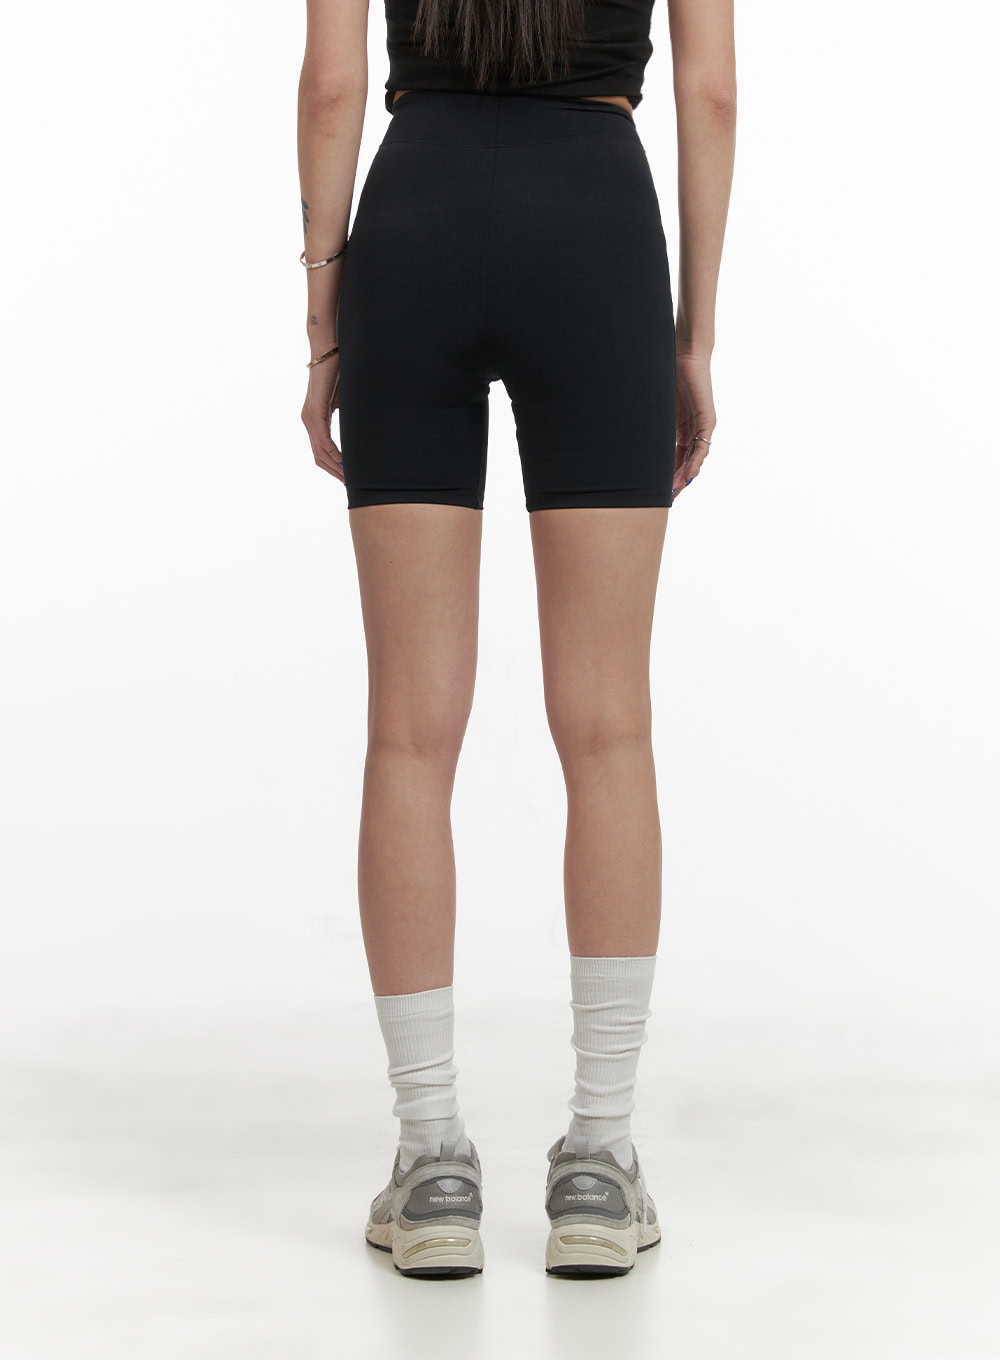 activewear-solid-biker-shorts-cy423